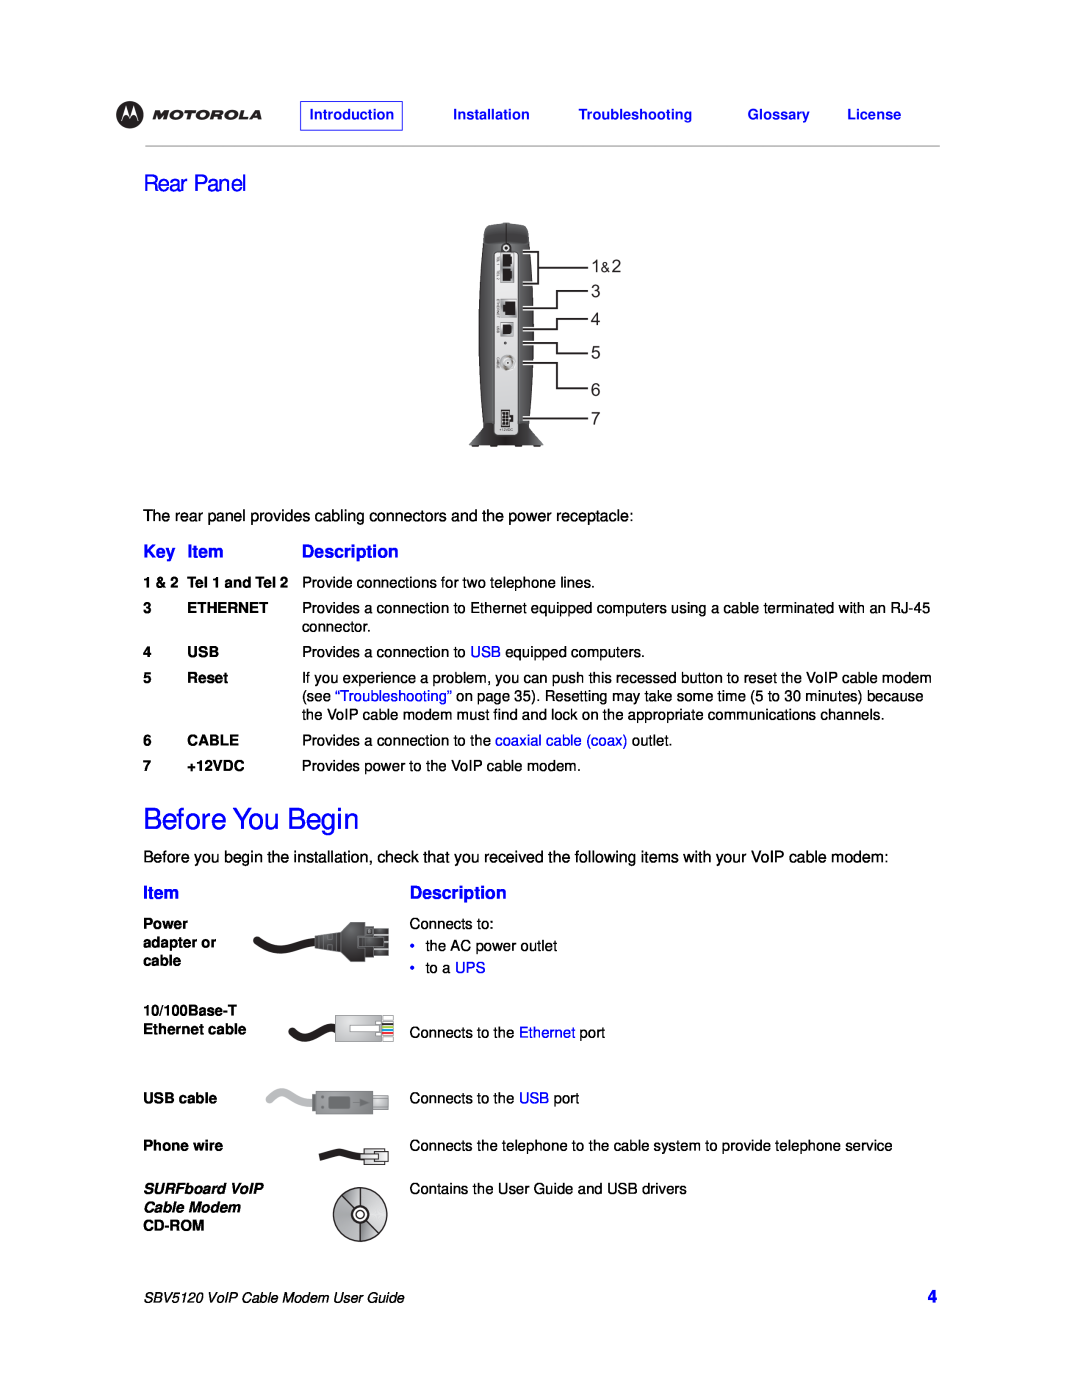 Motorola SBV5120 manual Before You Begin, Rear Panel, Key Item, Description, Introduction, 1 & 2 Tel 1 and Tel 